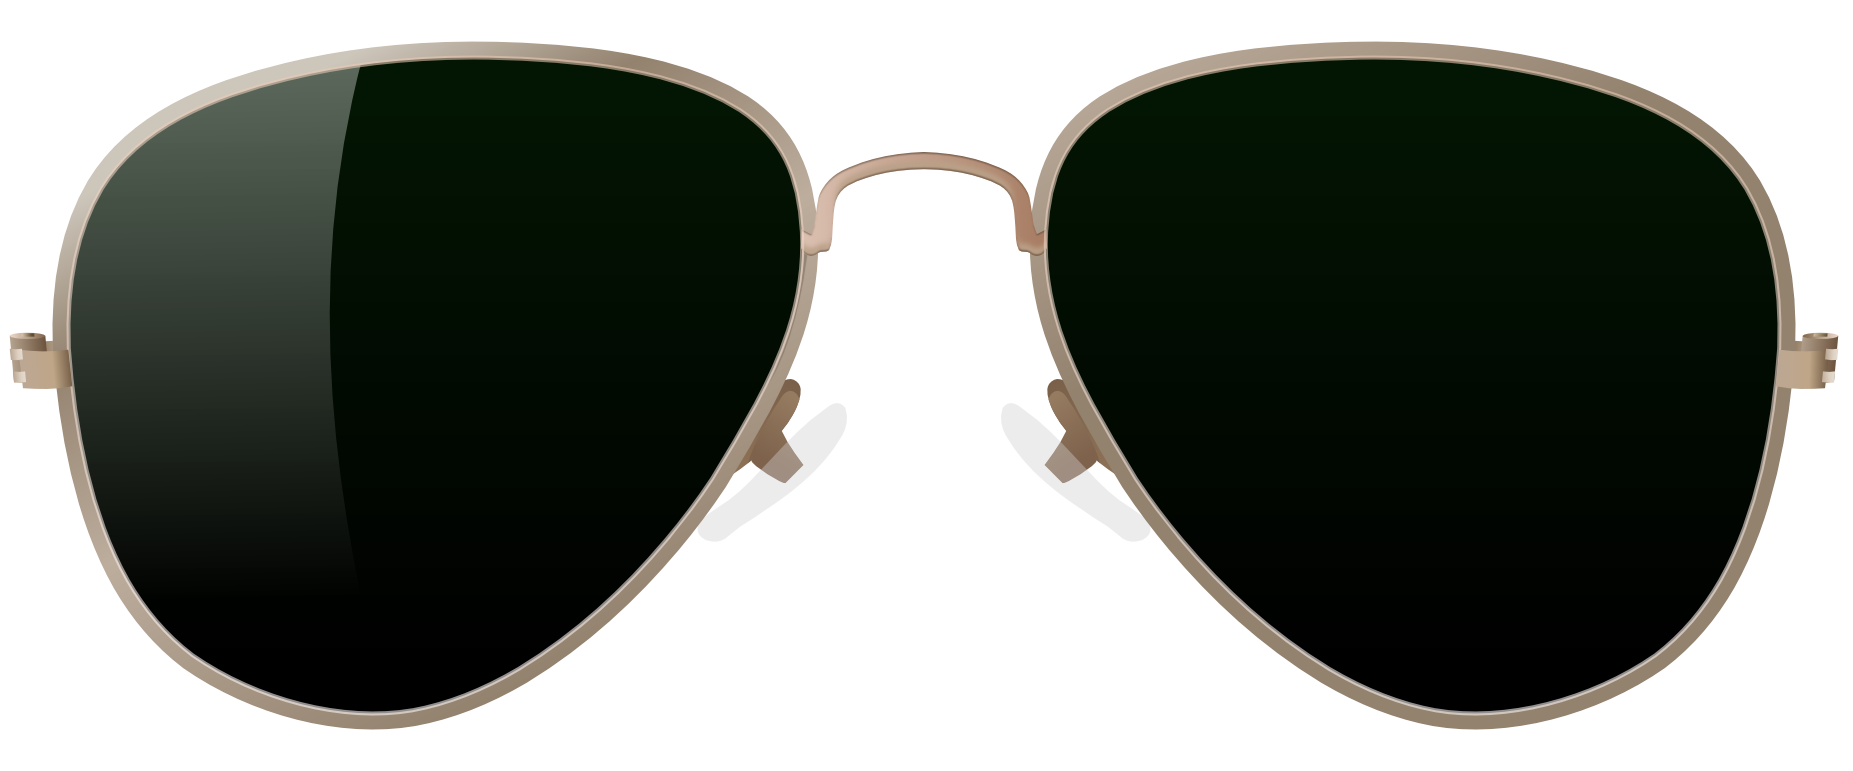 Aviator sunglasses Eyewear Ray-Ban - Sunglasses Free Download Png png